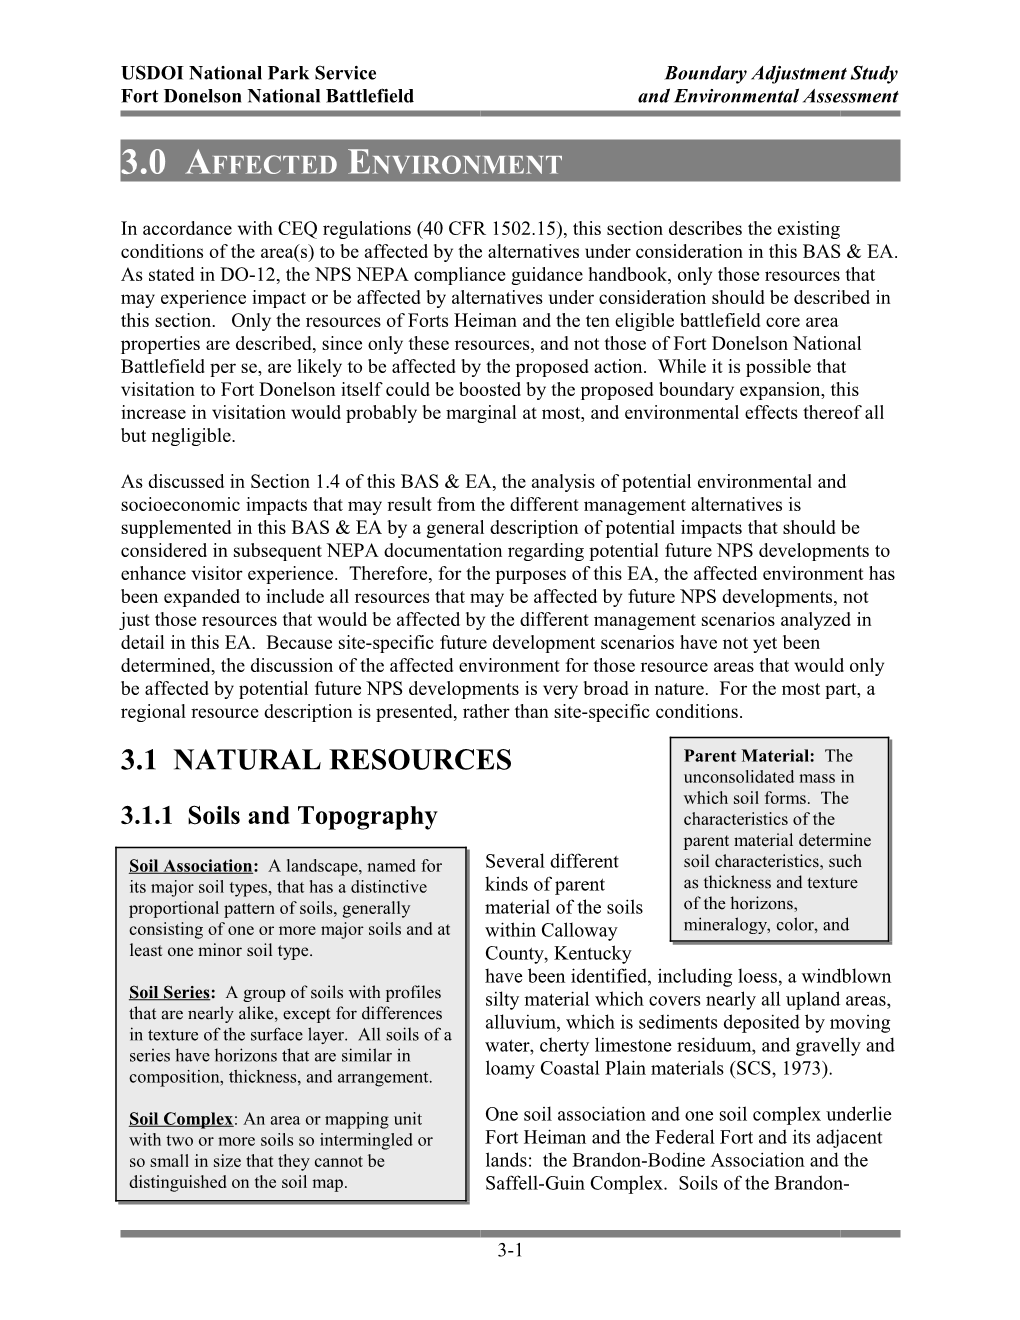 USDOI National Park Serviceboundary Adjustment Study